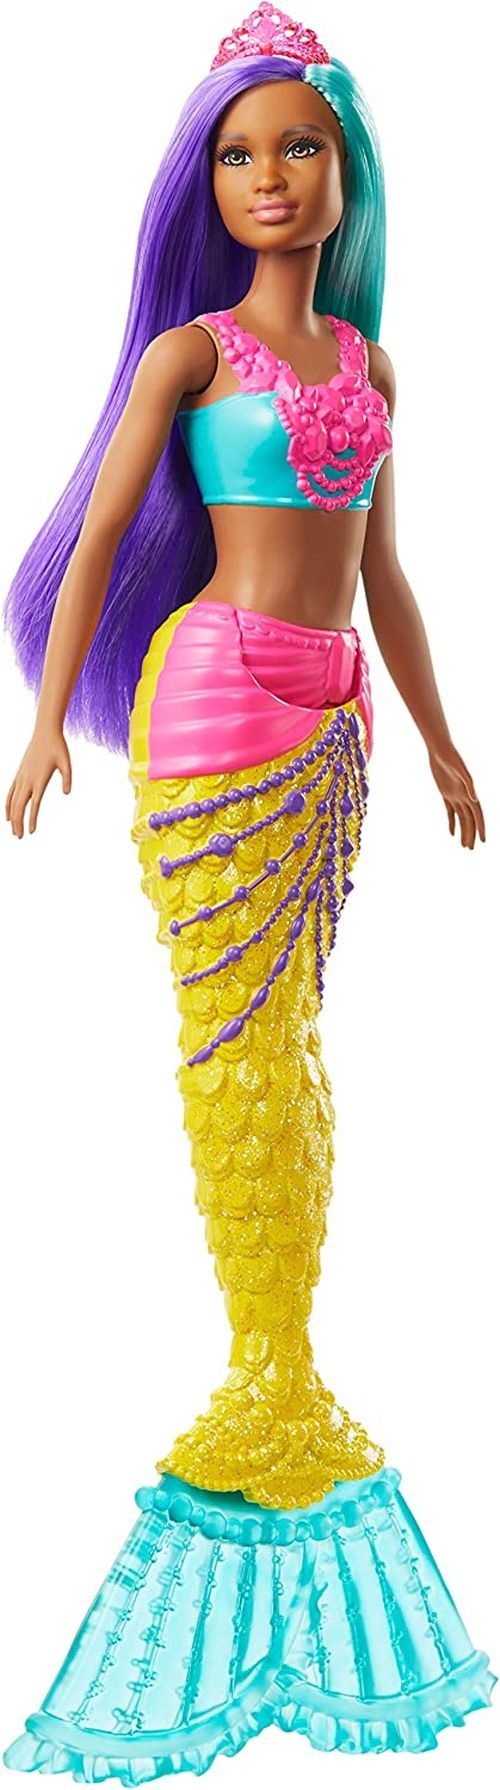 MATTEL Dreamtopia Black Mermaid Barbie Doll - DOLLS